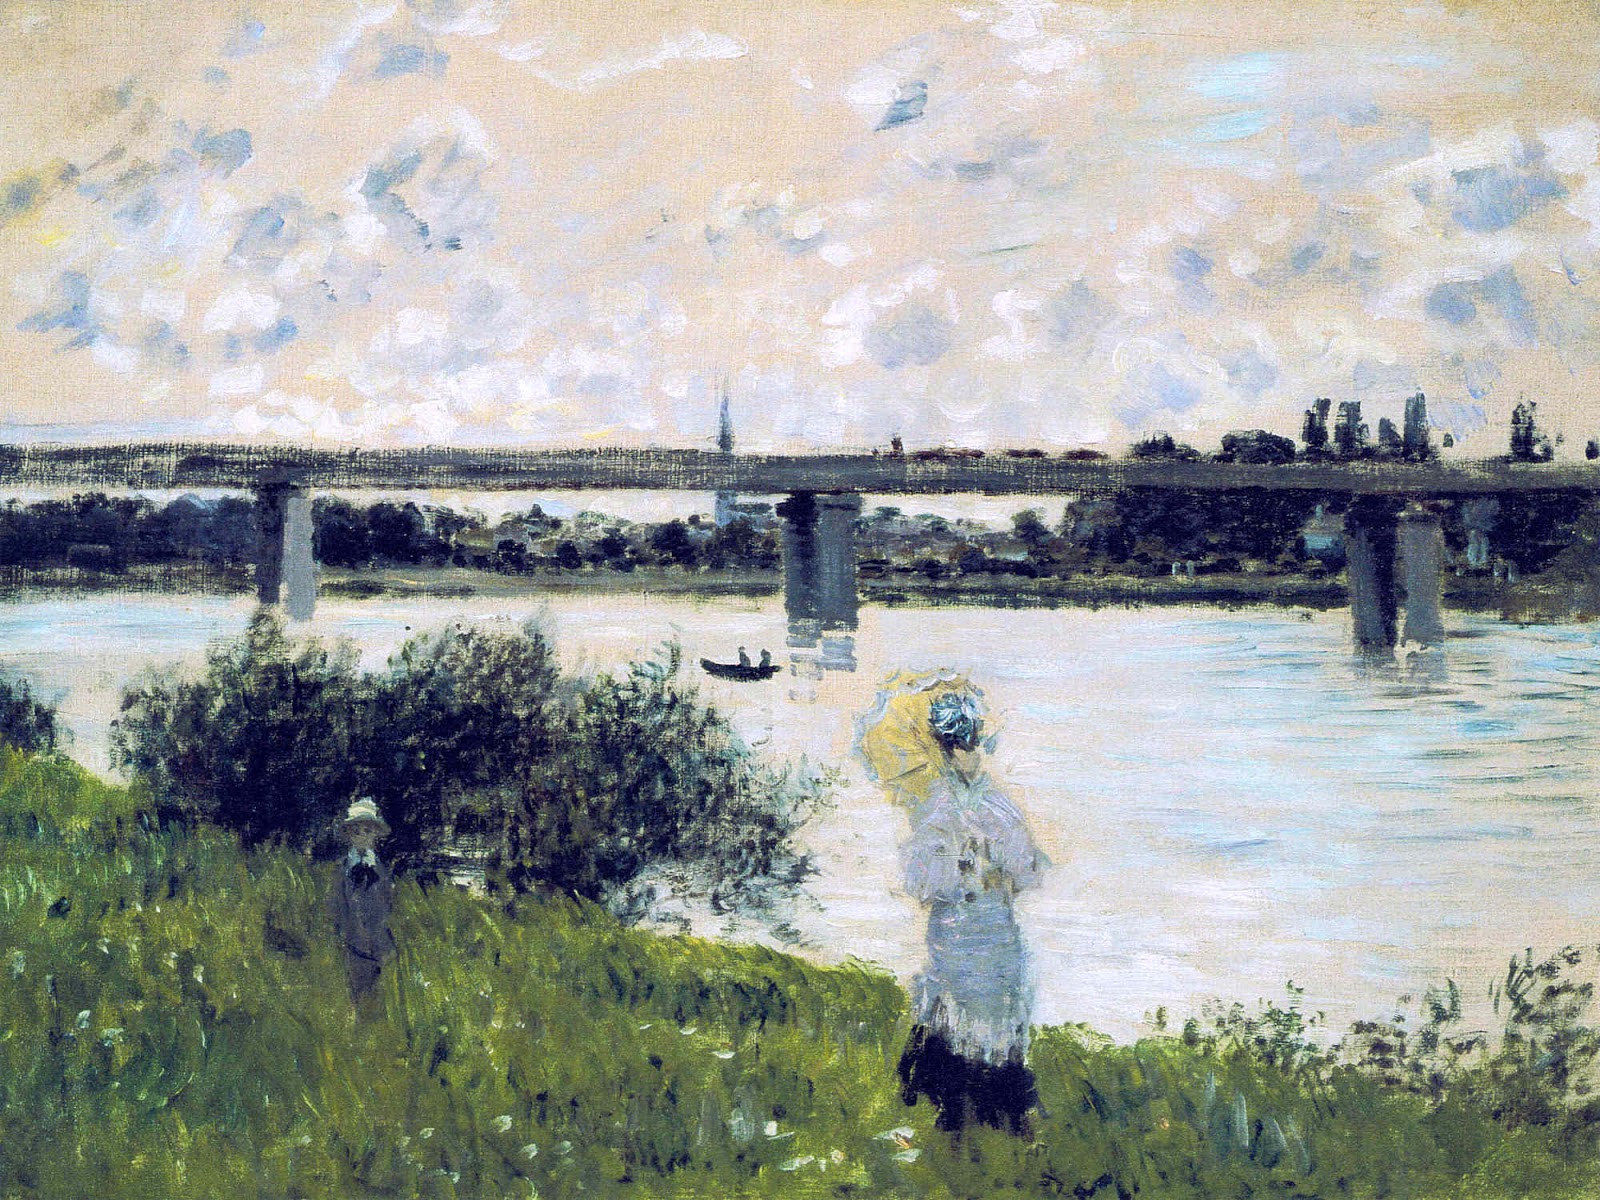 Claude+Monet-1840-1926 (797).jpg